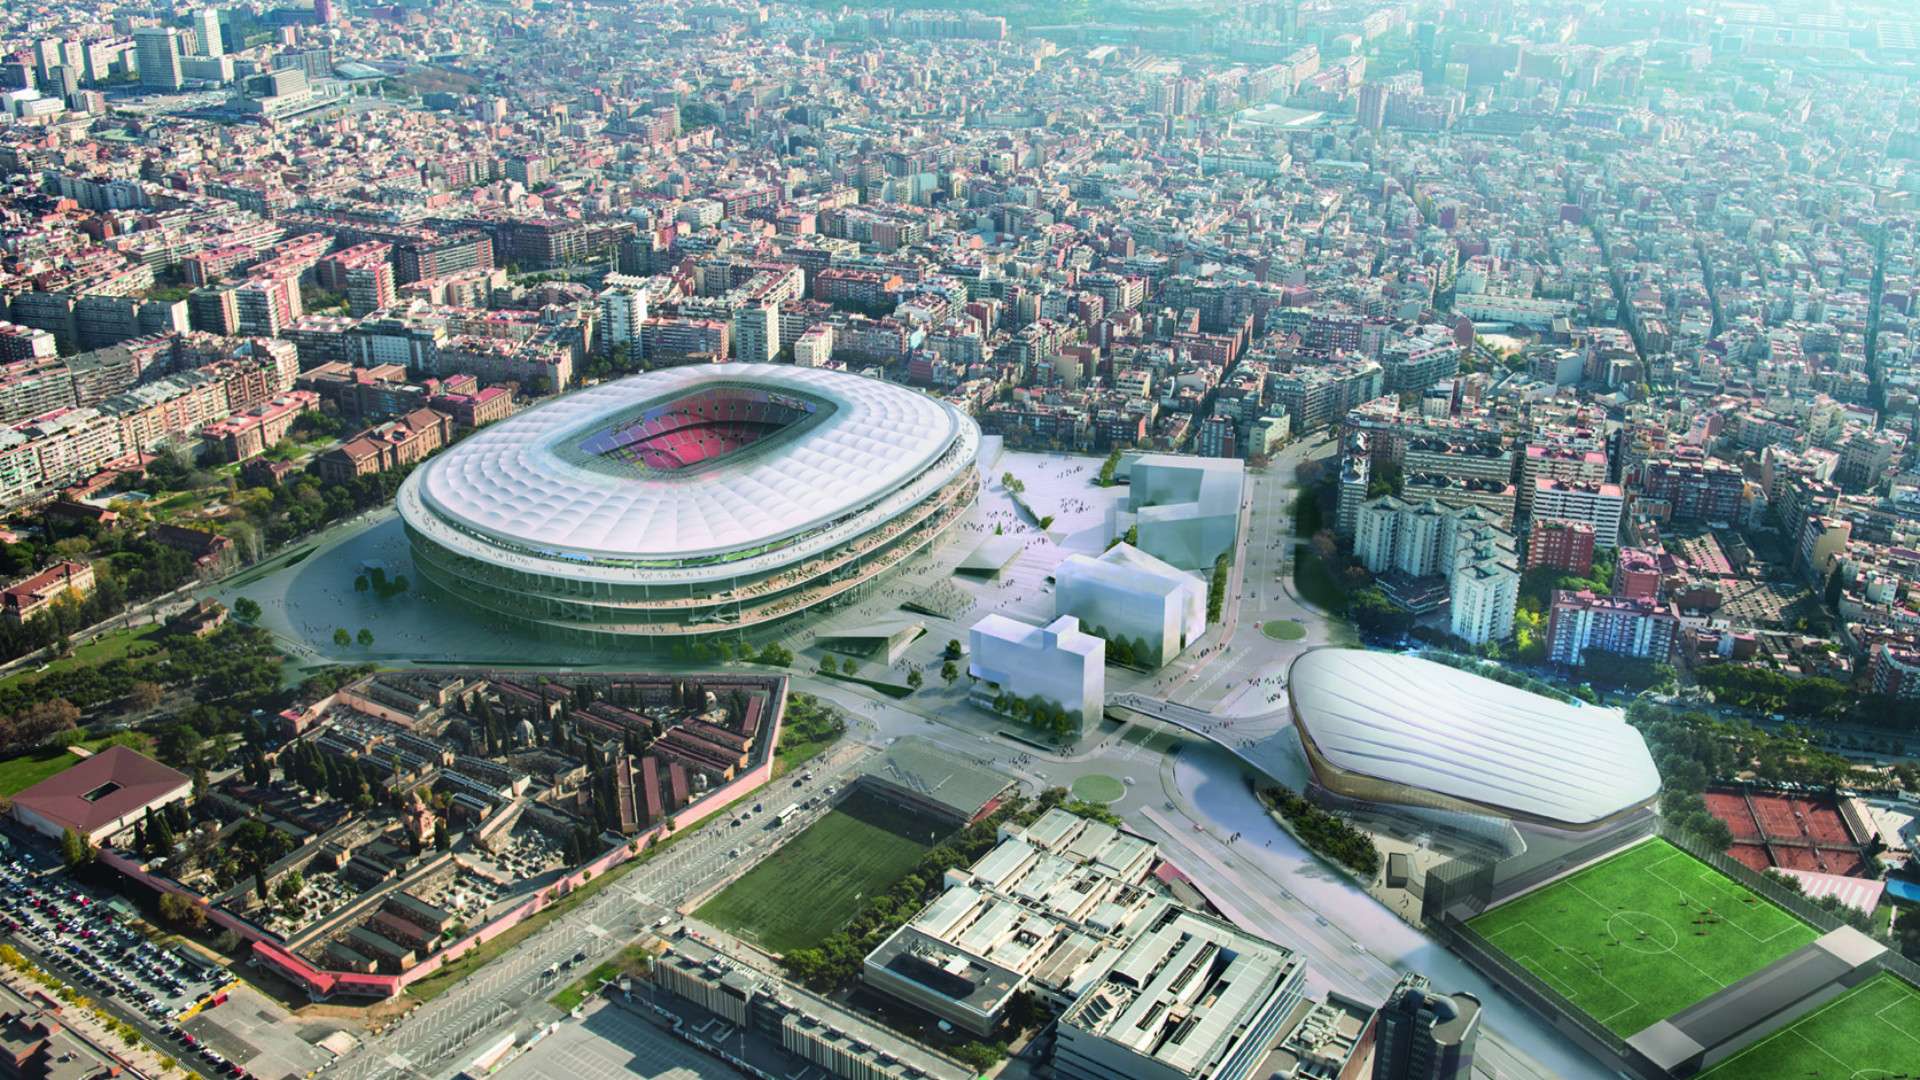 Vista aérea - New Camp Nou